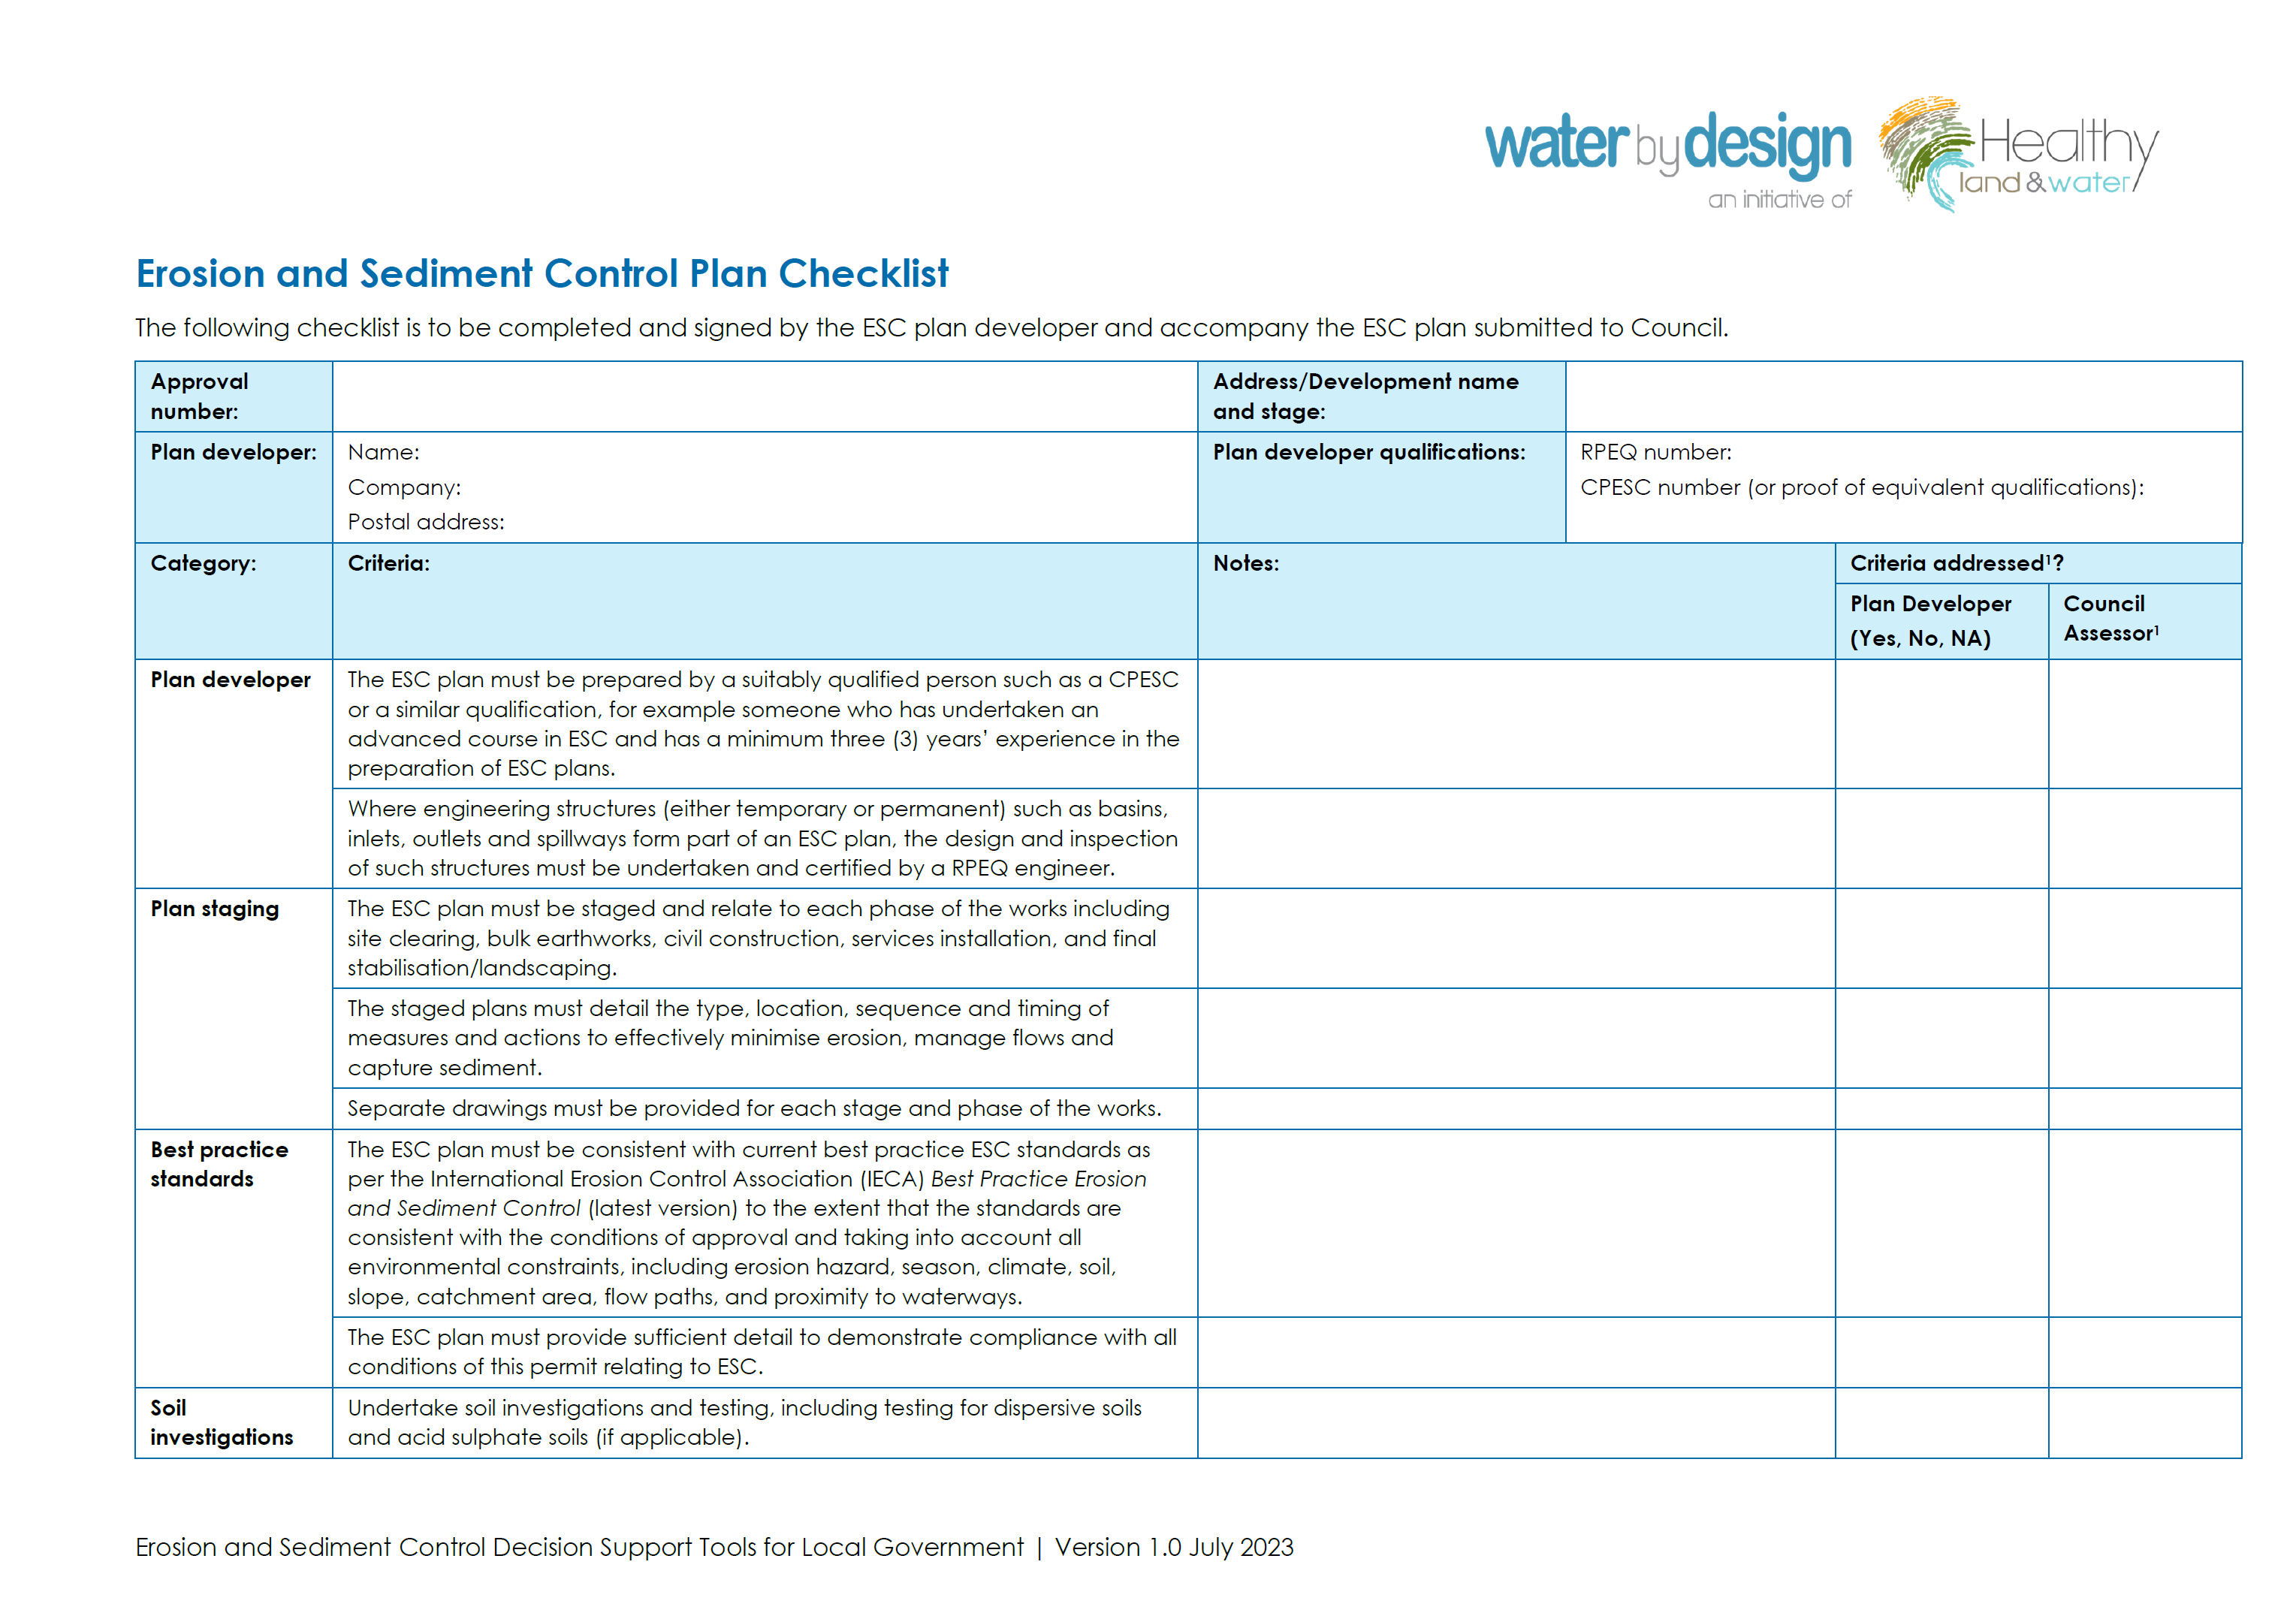 Erosion and Sediment Control Plan Checklist (2023)